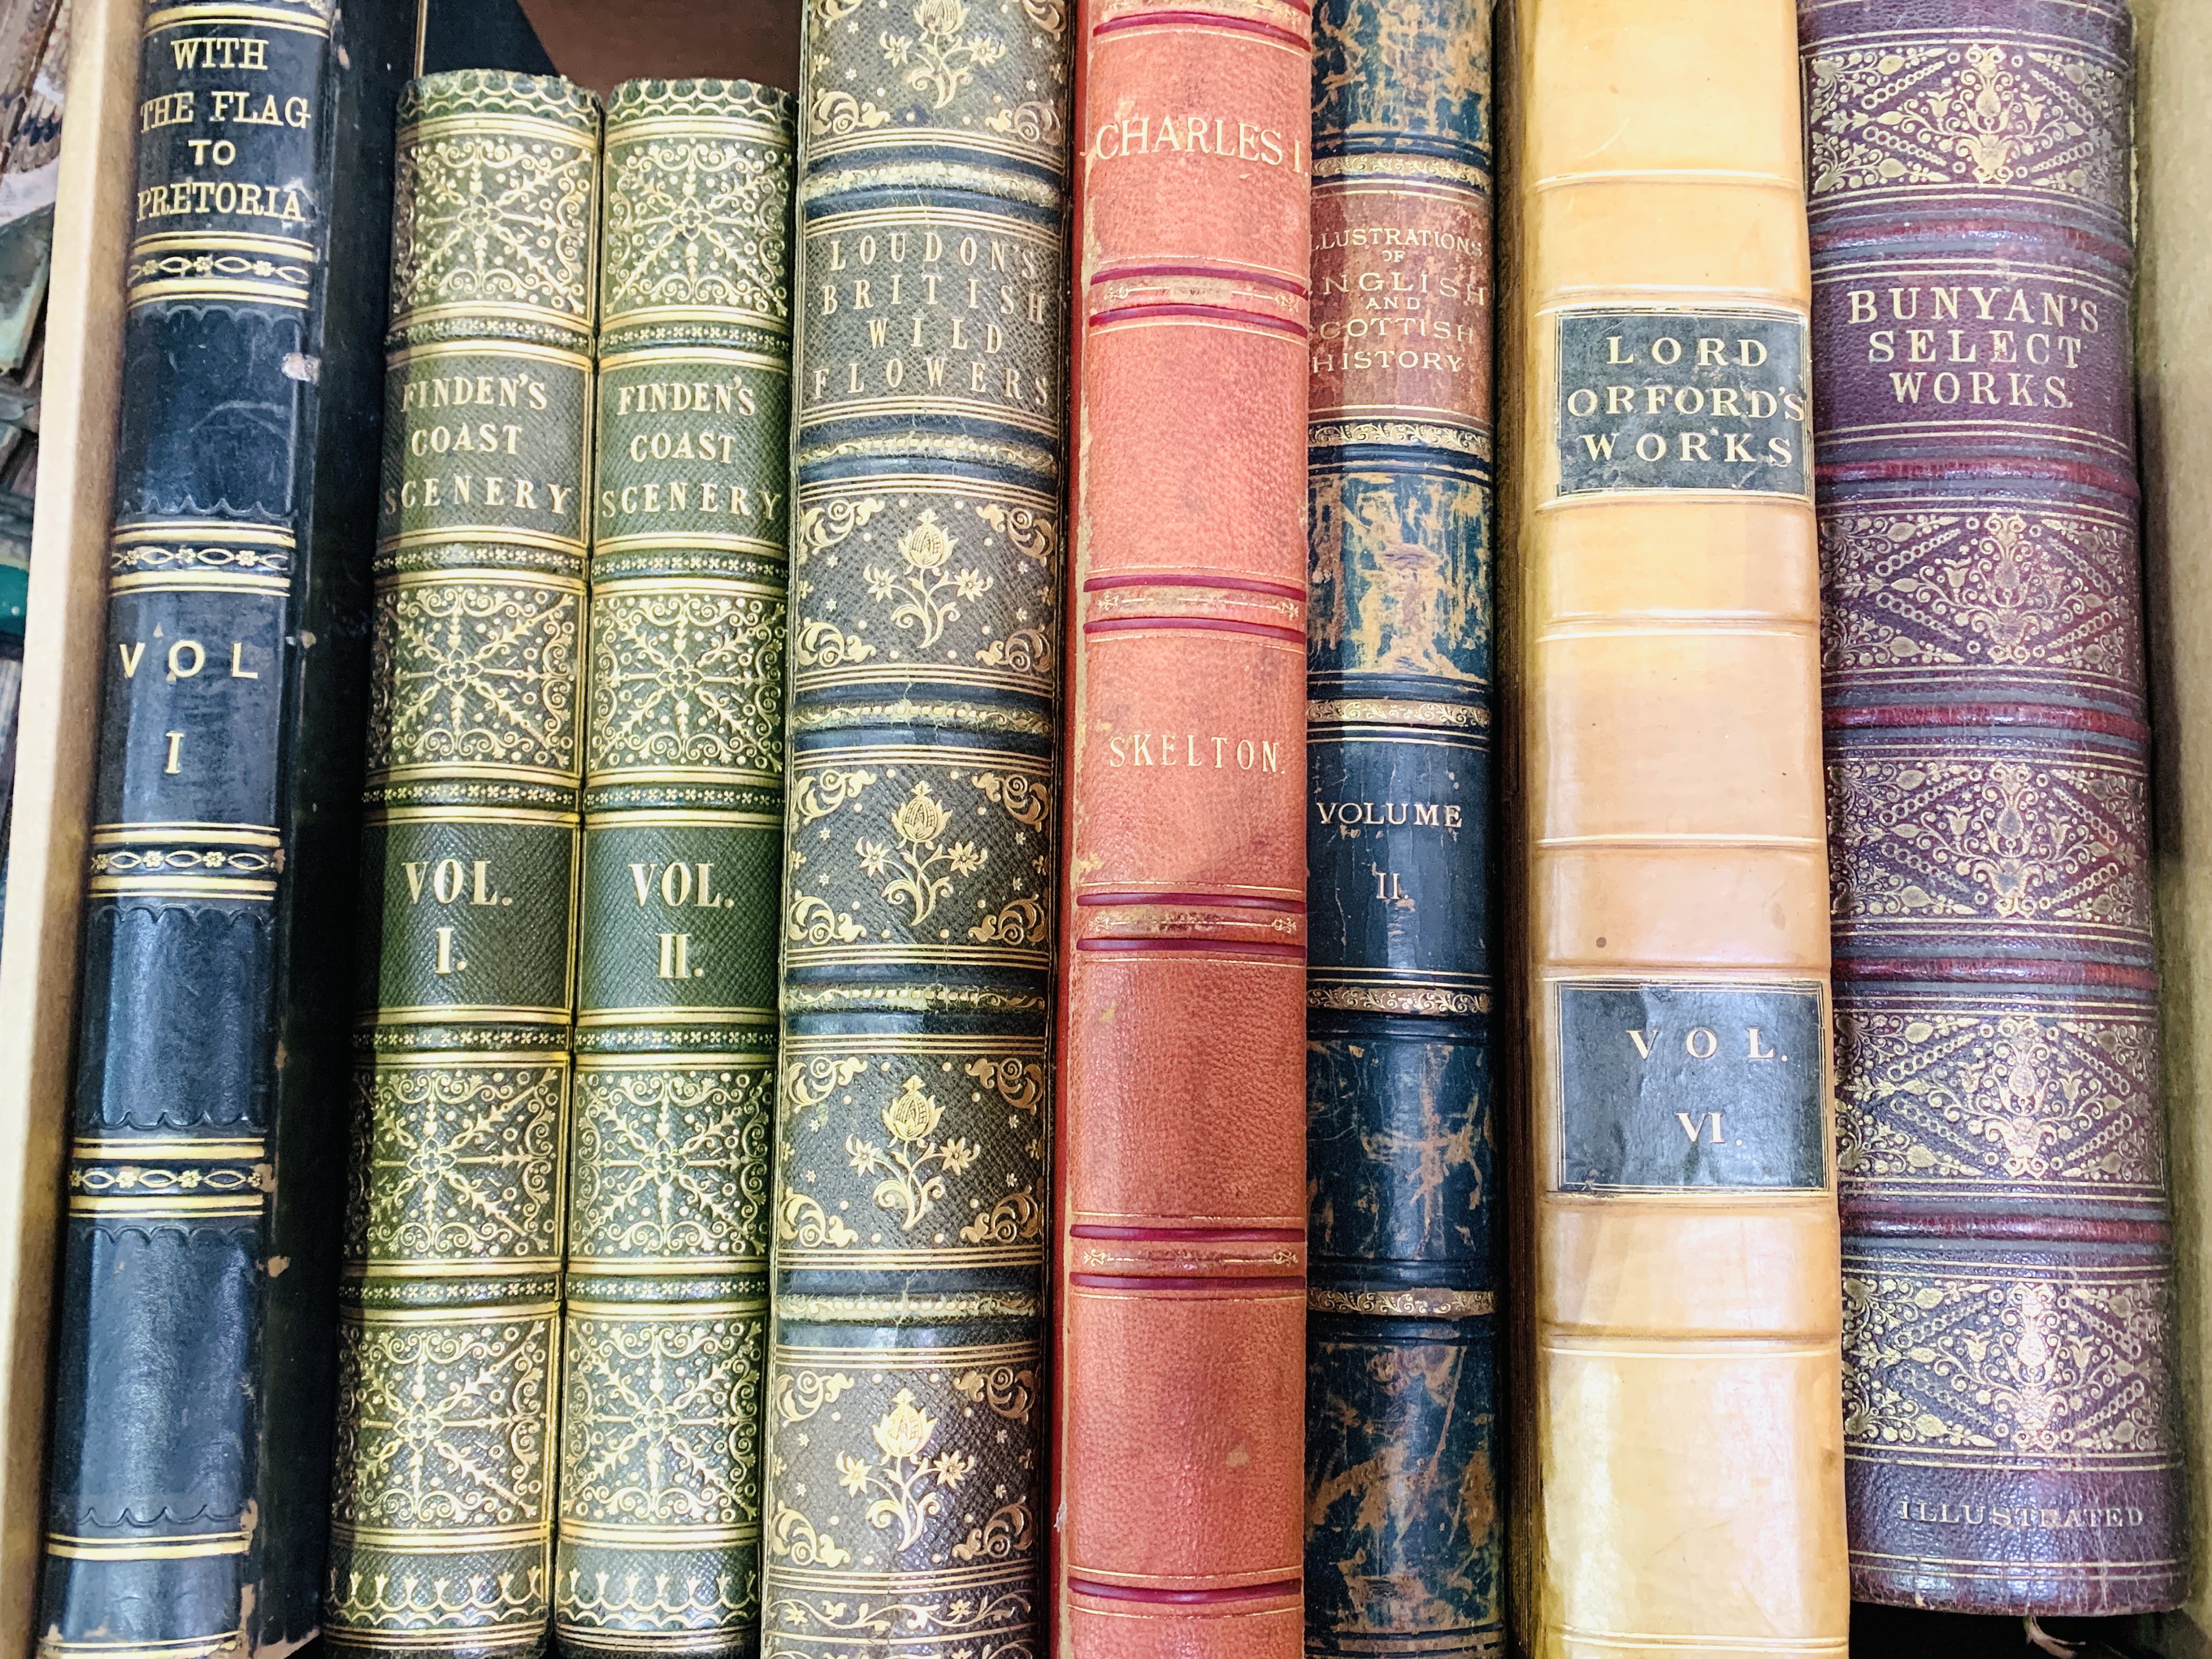 Eight quarto volumes with decorative bindings